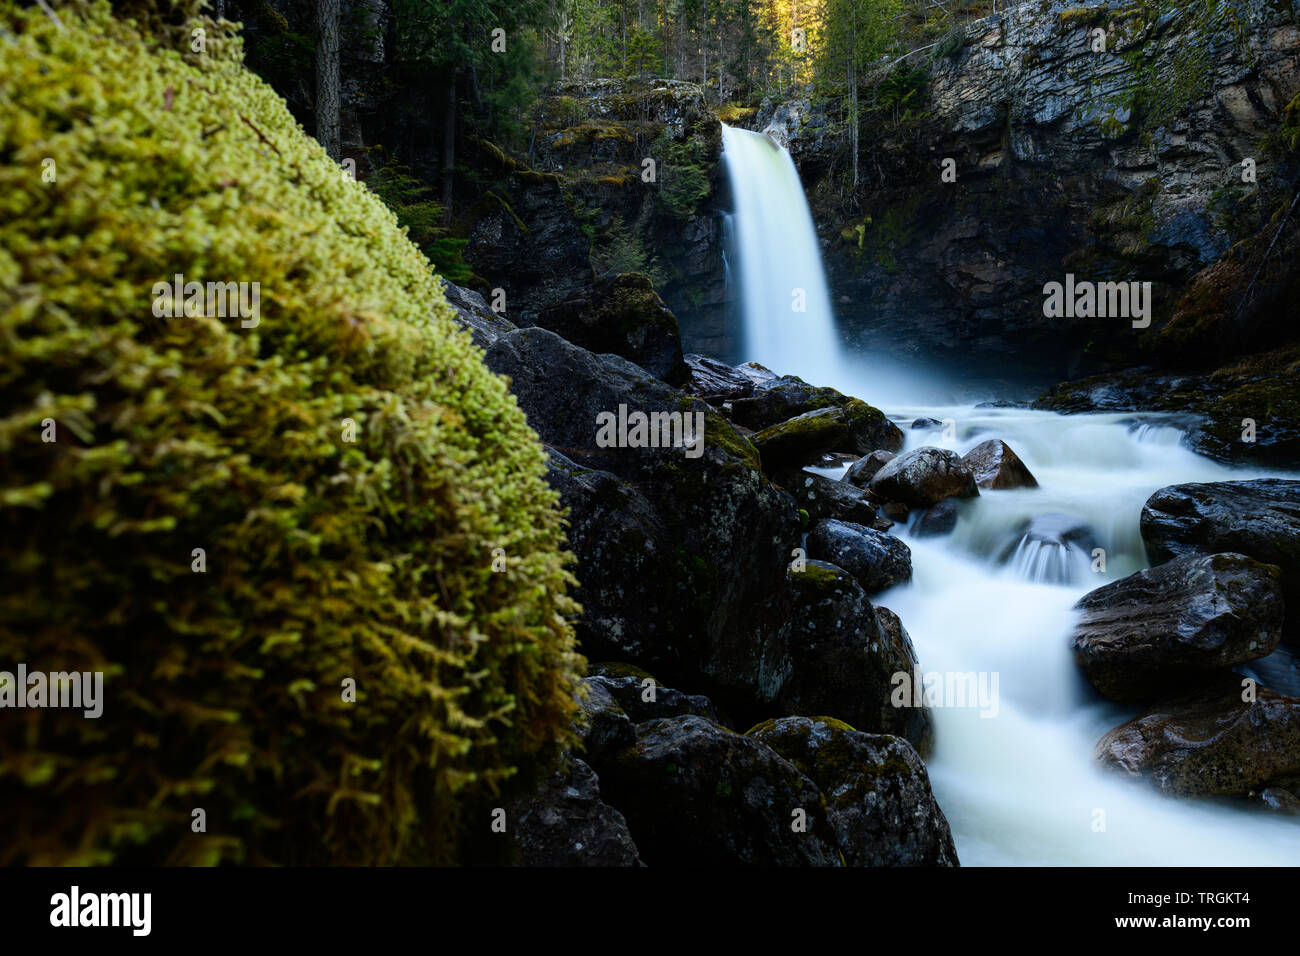 Sutherland Falls near Revelstoke, British Columbia, Canada, a popular tourist destination and an easy hike. Stock Photo